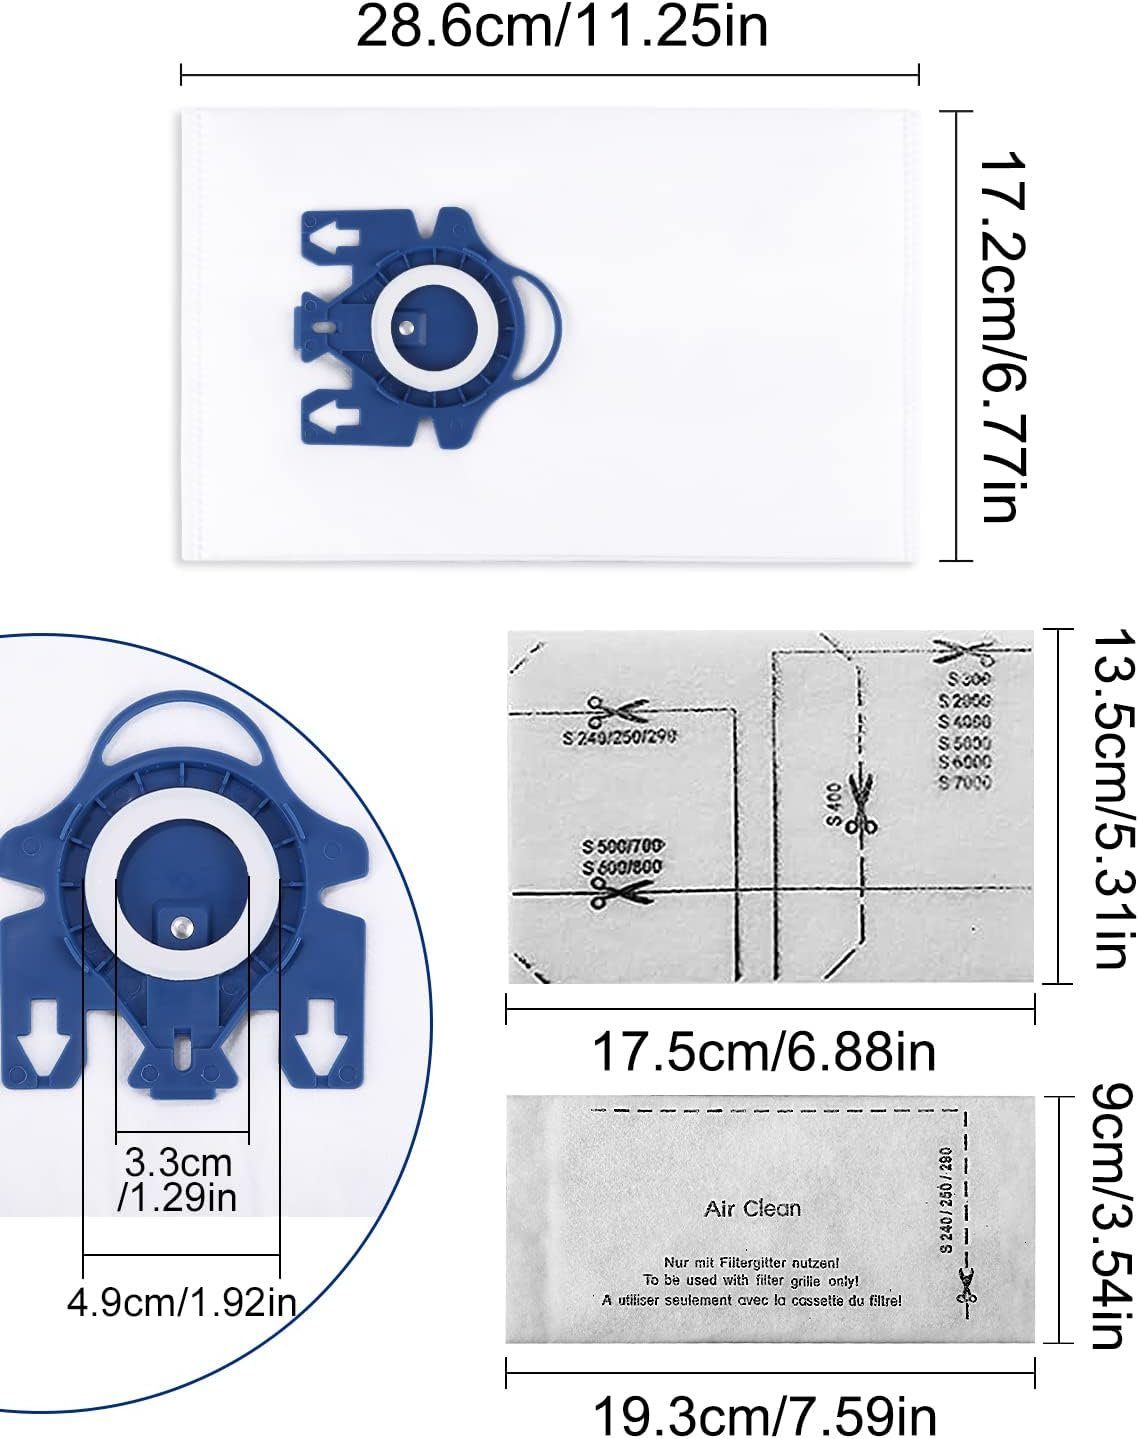 10 3D Staubsaugerbeutel autolock für Efficiency C3 Complete Staubsaugerbeutel GN C2 C1, Classic